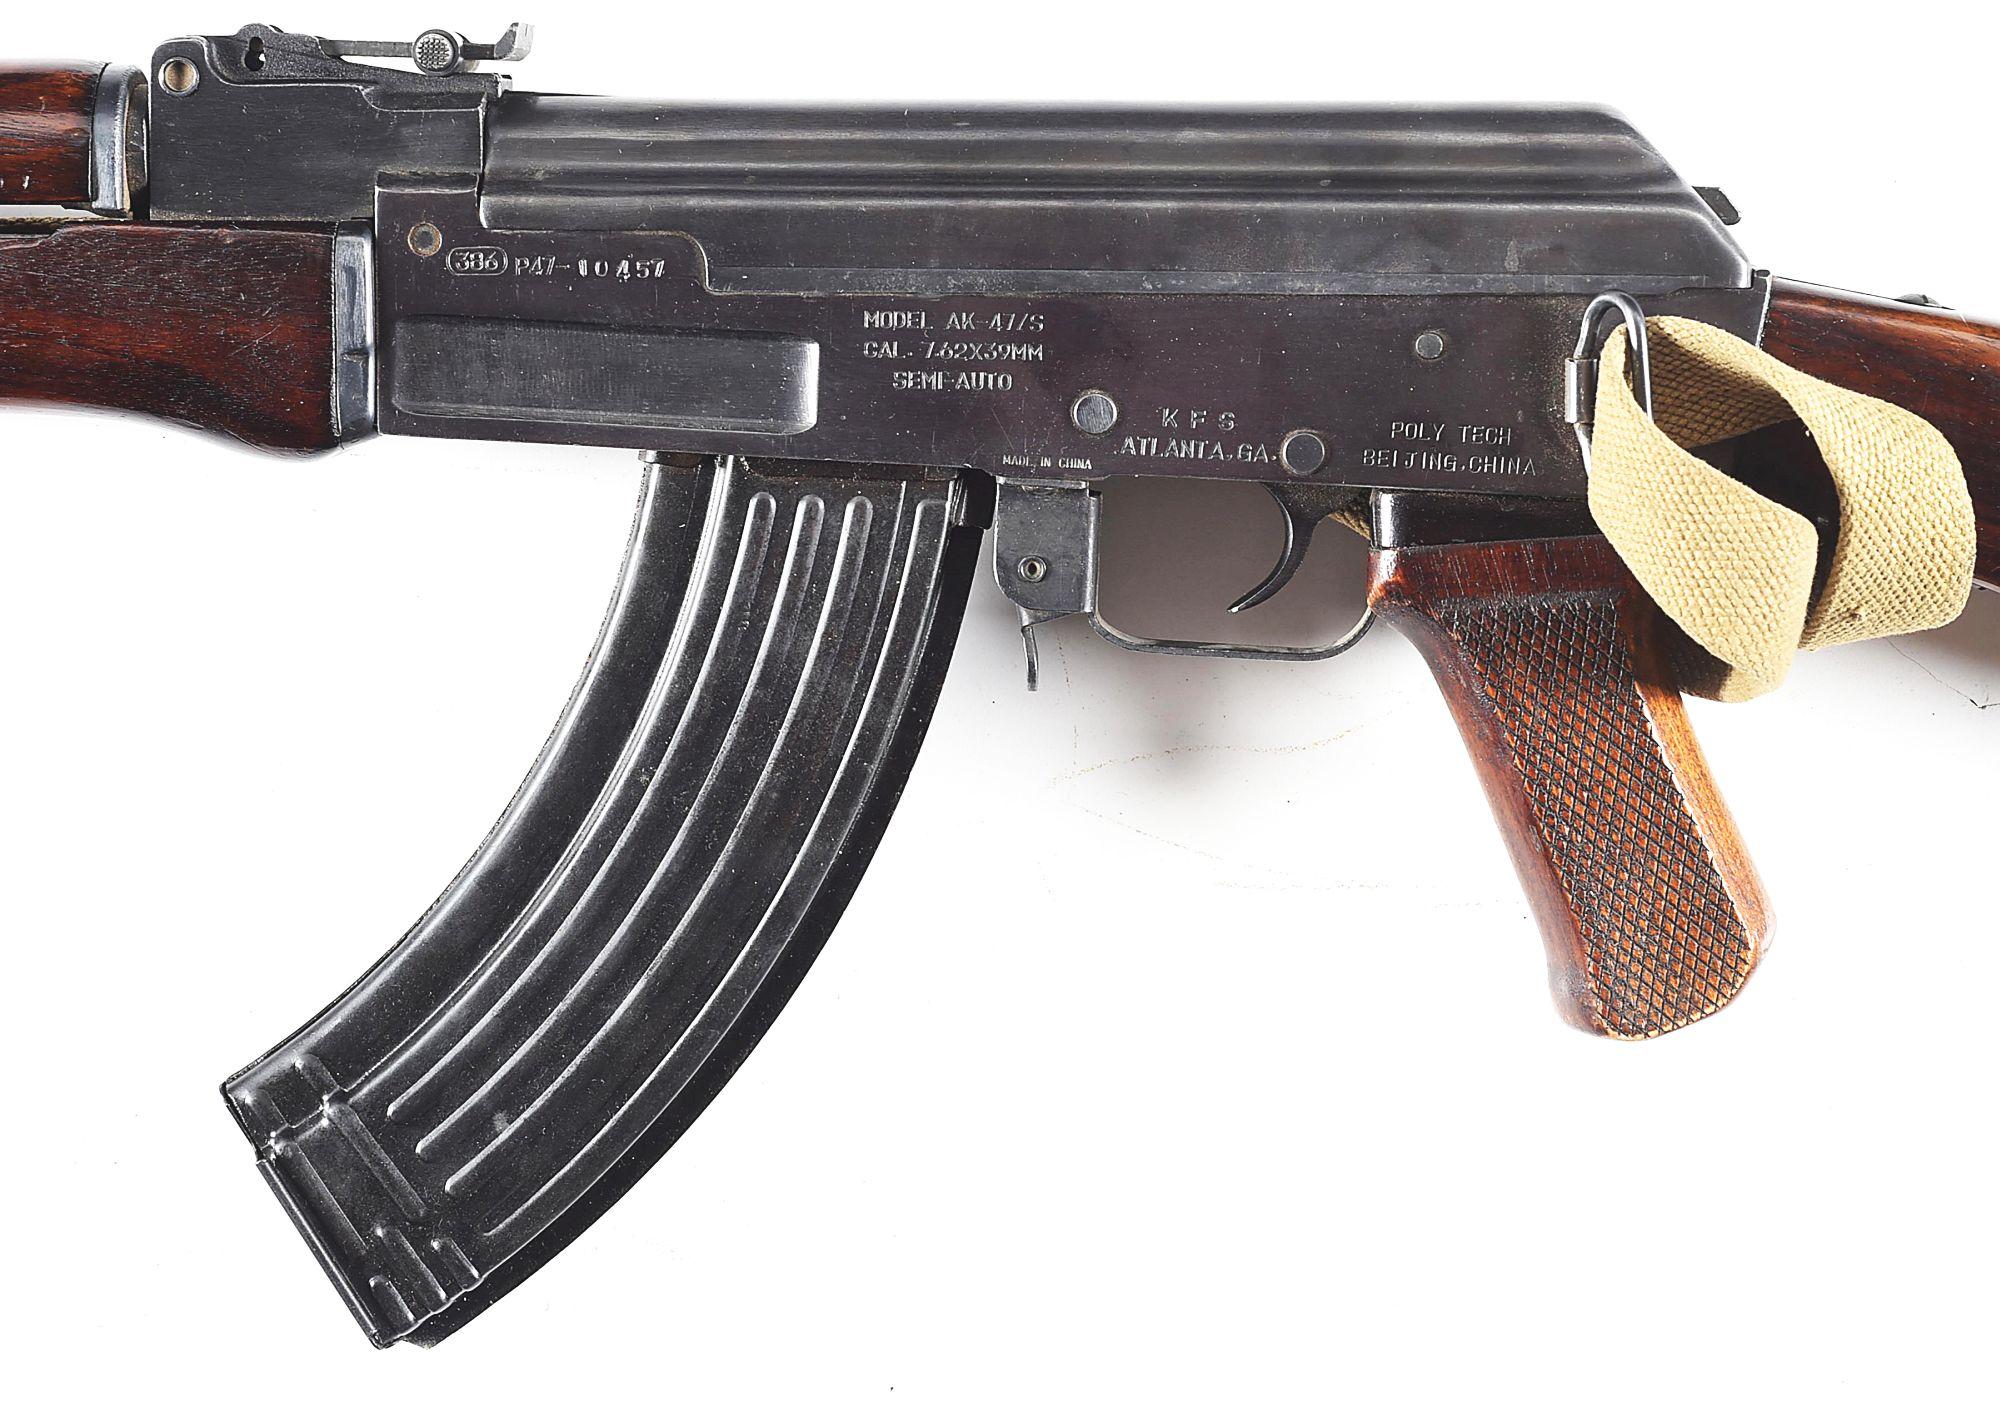 (M) DESIRABLE PRE-BAN CHINESE POLYTECH LEGEND MILLED AK-47/S SEMI AUTOMATIC RIFLE.